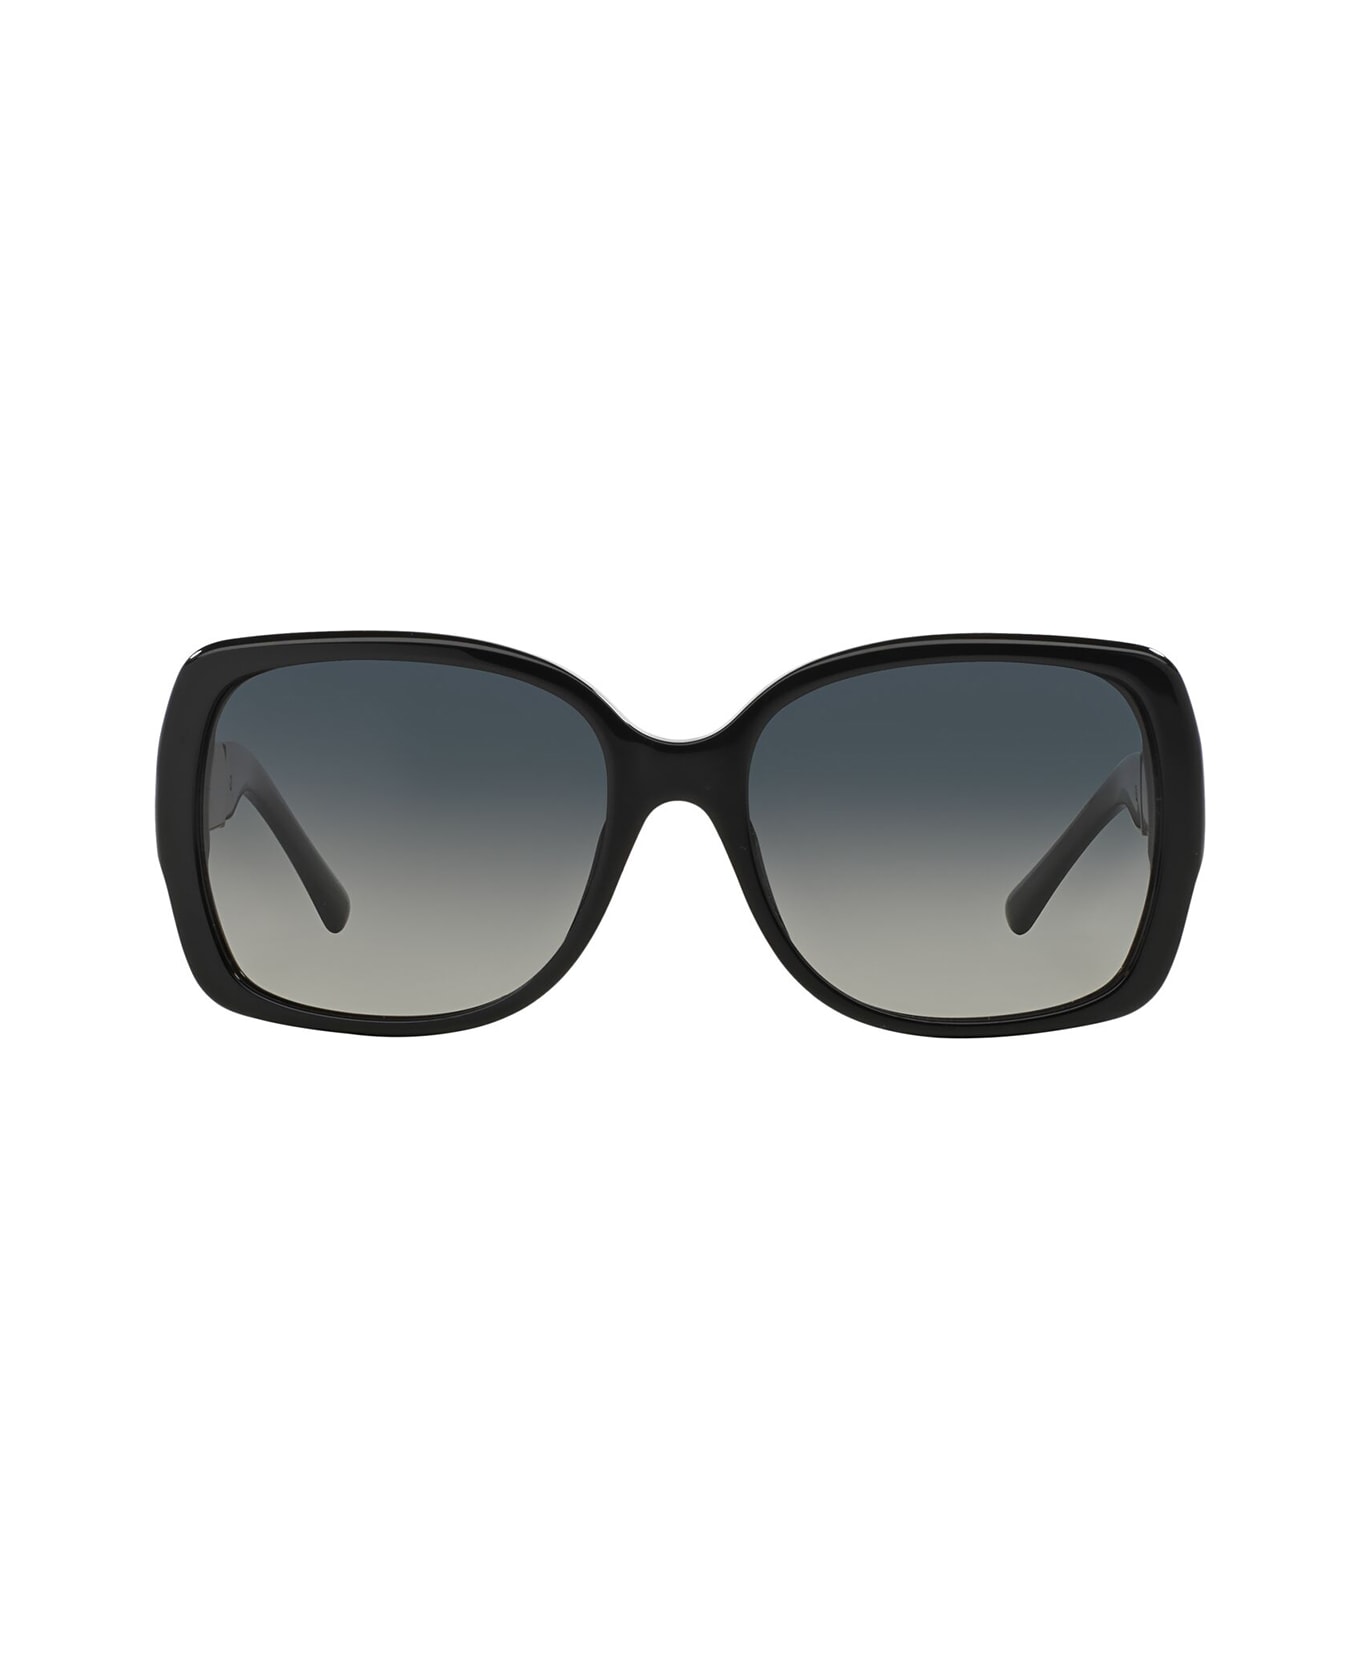 Burberry Eyewear Be4160 Black Sunglasses - Black